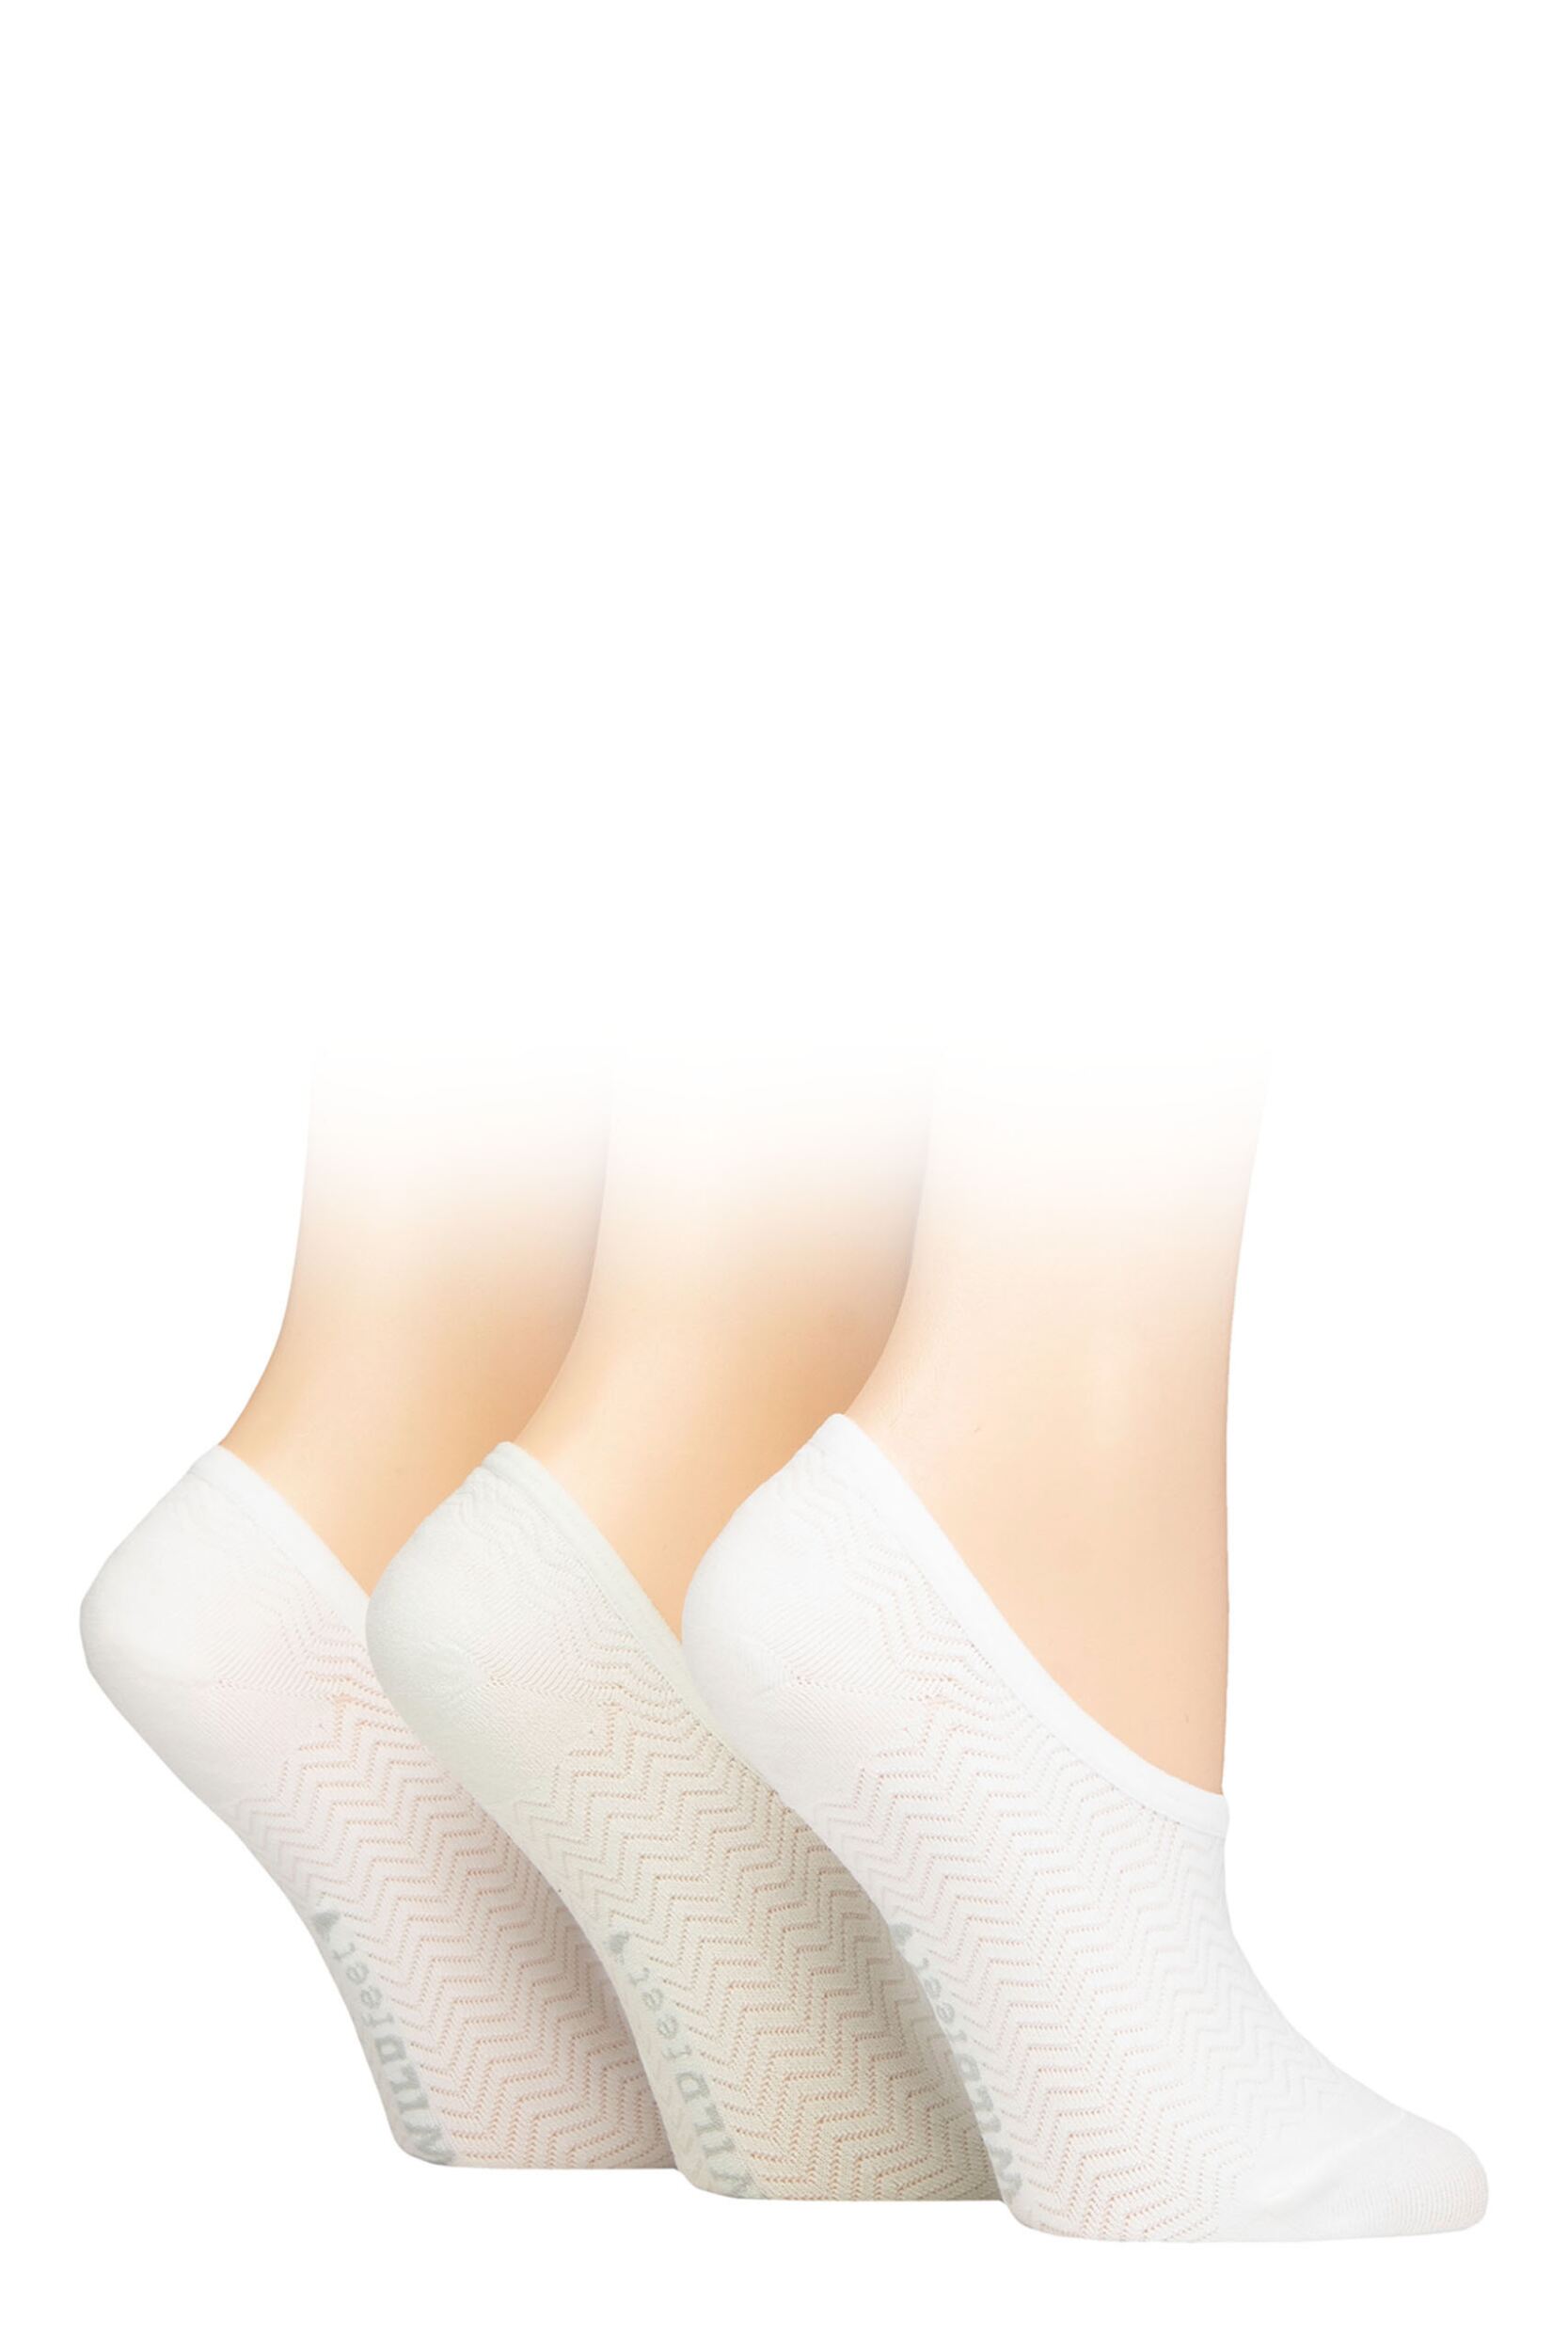 Ladies 3 Pair SOCKSHOP Wildfeet Mesh Pattern Fashion Shoe Liner Socks Zig Zag White / Sage / White 4-8